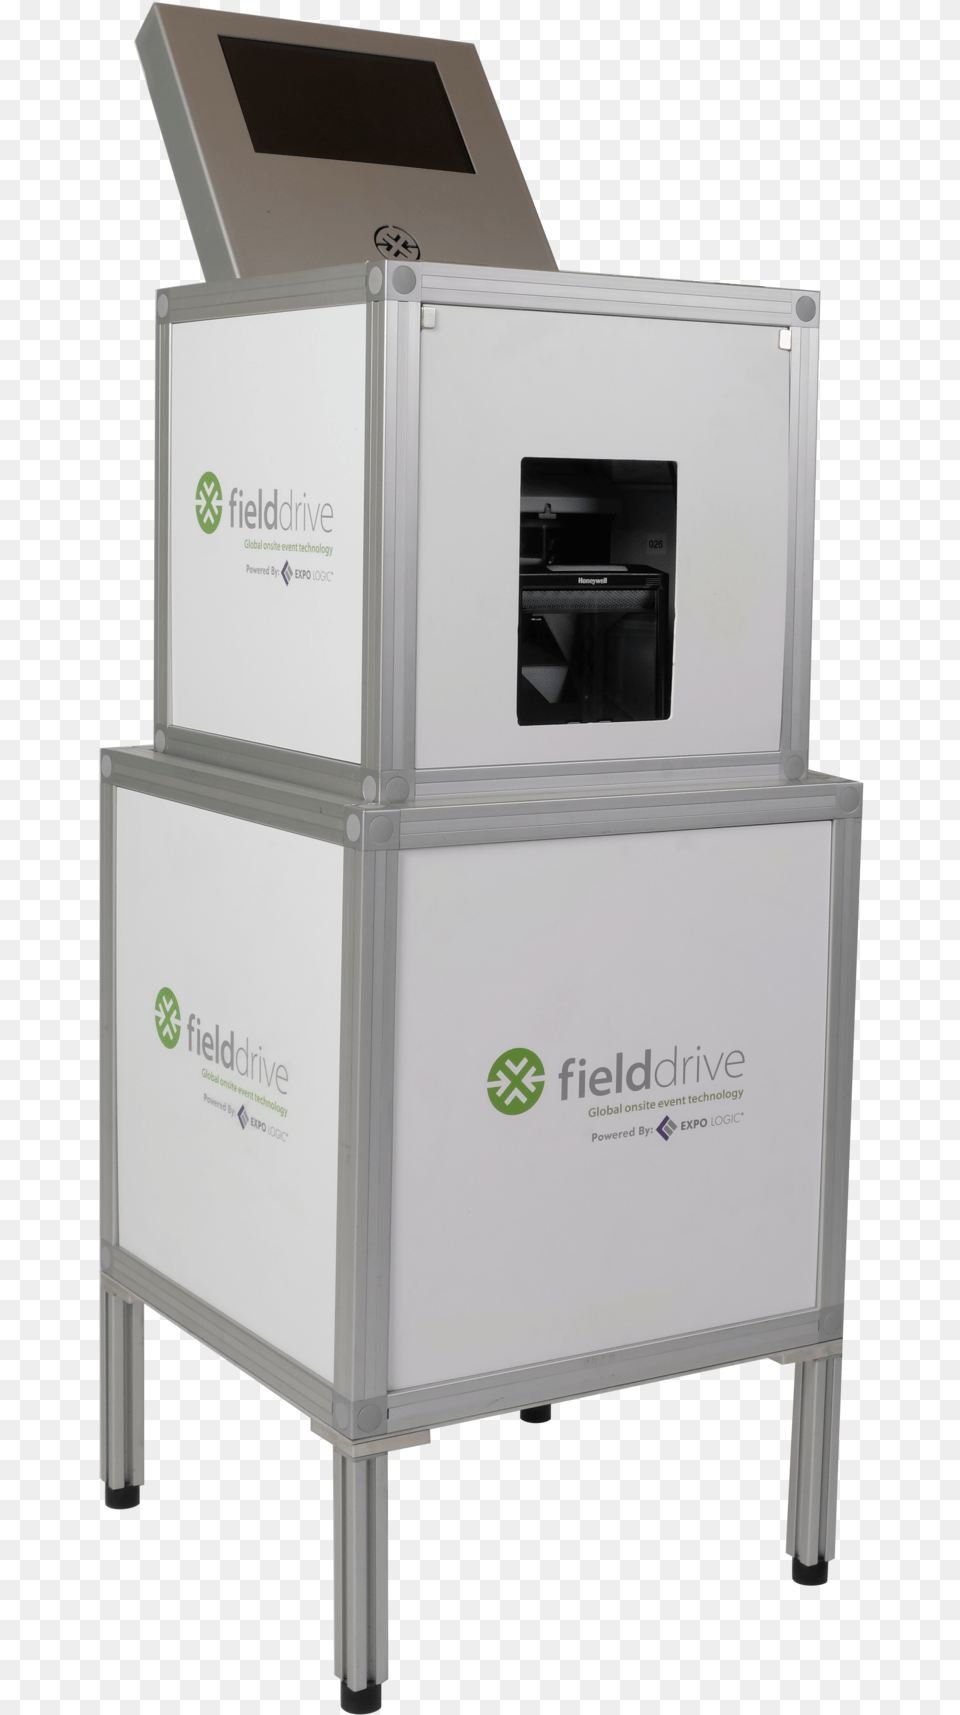 Kiosk Fielddrive, Computer Hardware, Electronics, Hardware, Monitor Free Png